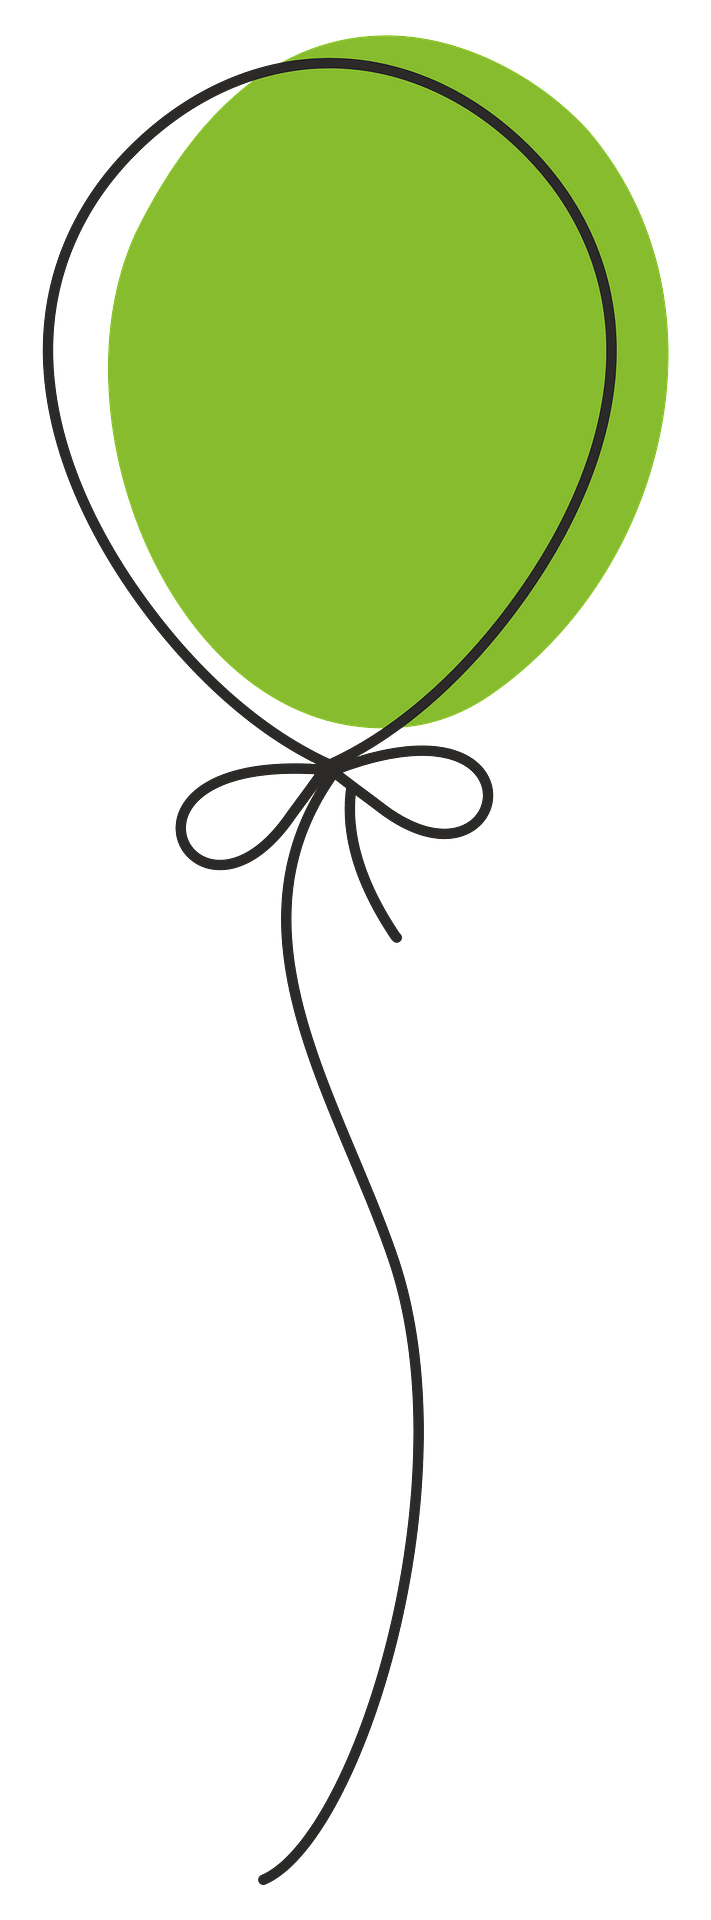 Verjaardag groene ballon PNG afbeelding